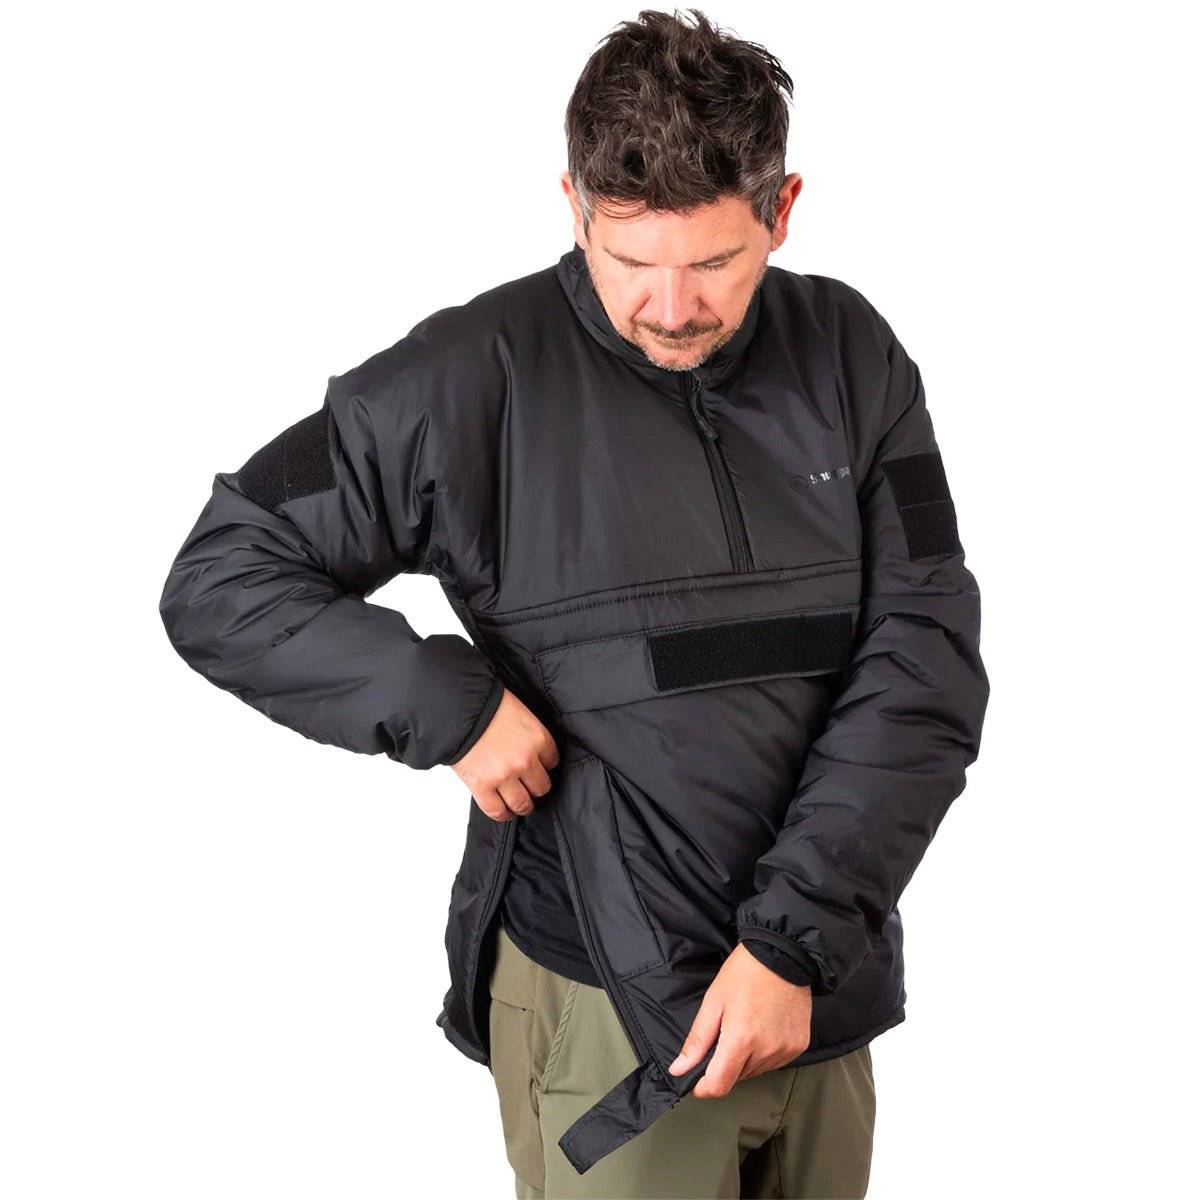 Snugpak Tactical Softie Smock Black - John Bull Clothing